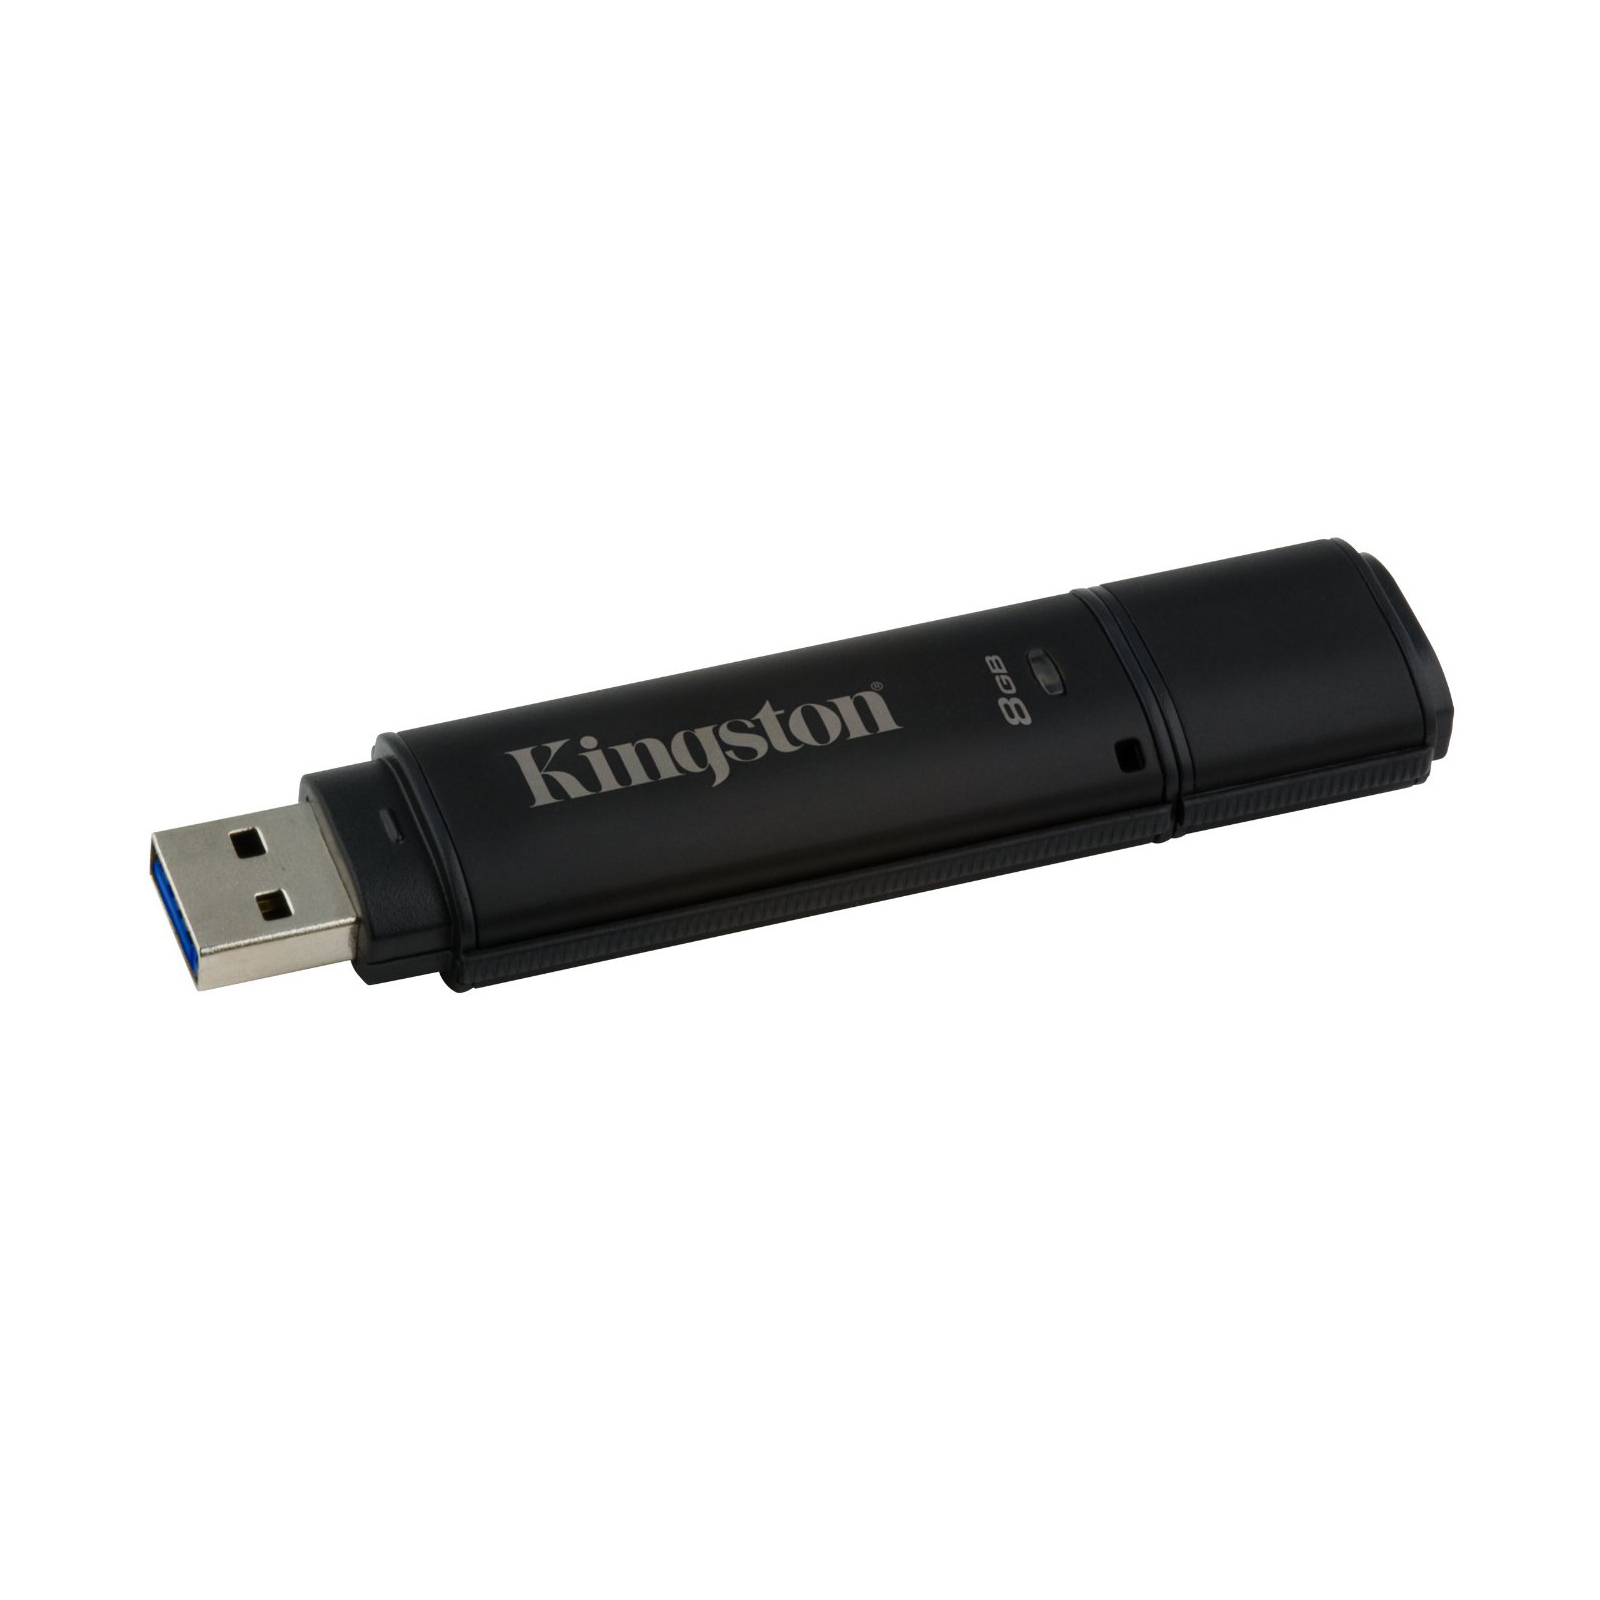 USB флеш накопитель Kingston 16GB DataTraveler 4000 G2 Metal Black USB 3.0 (DT4000G2/16GB) изображение 4